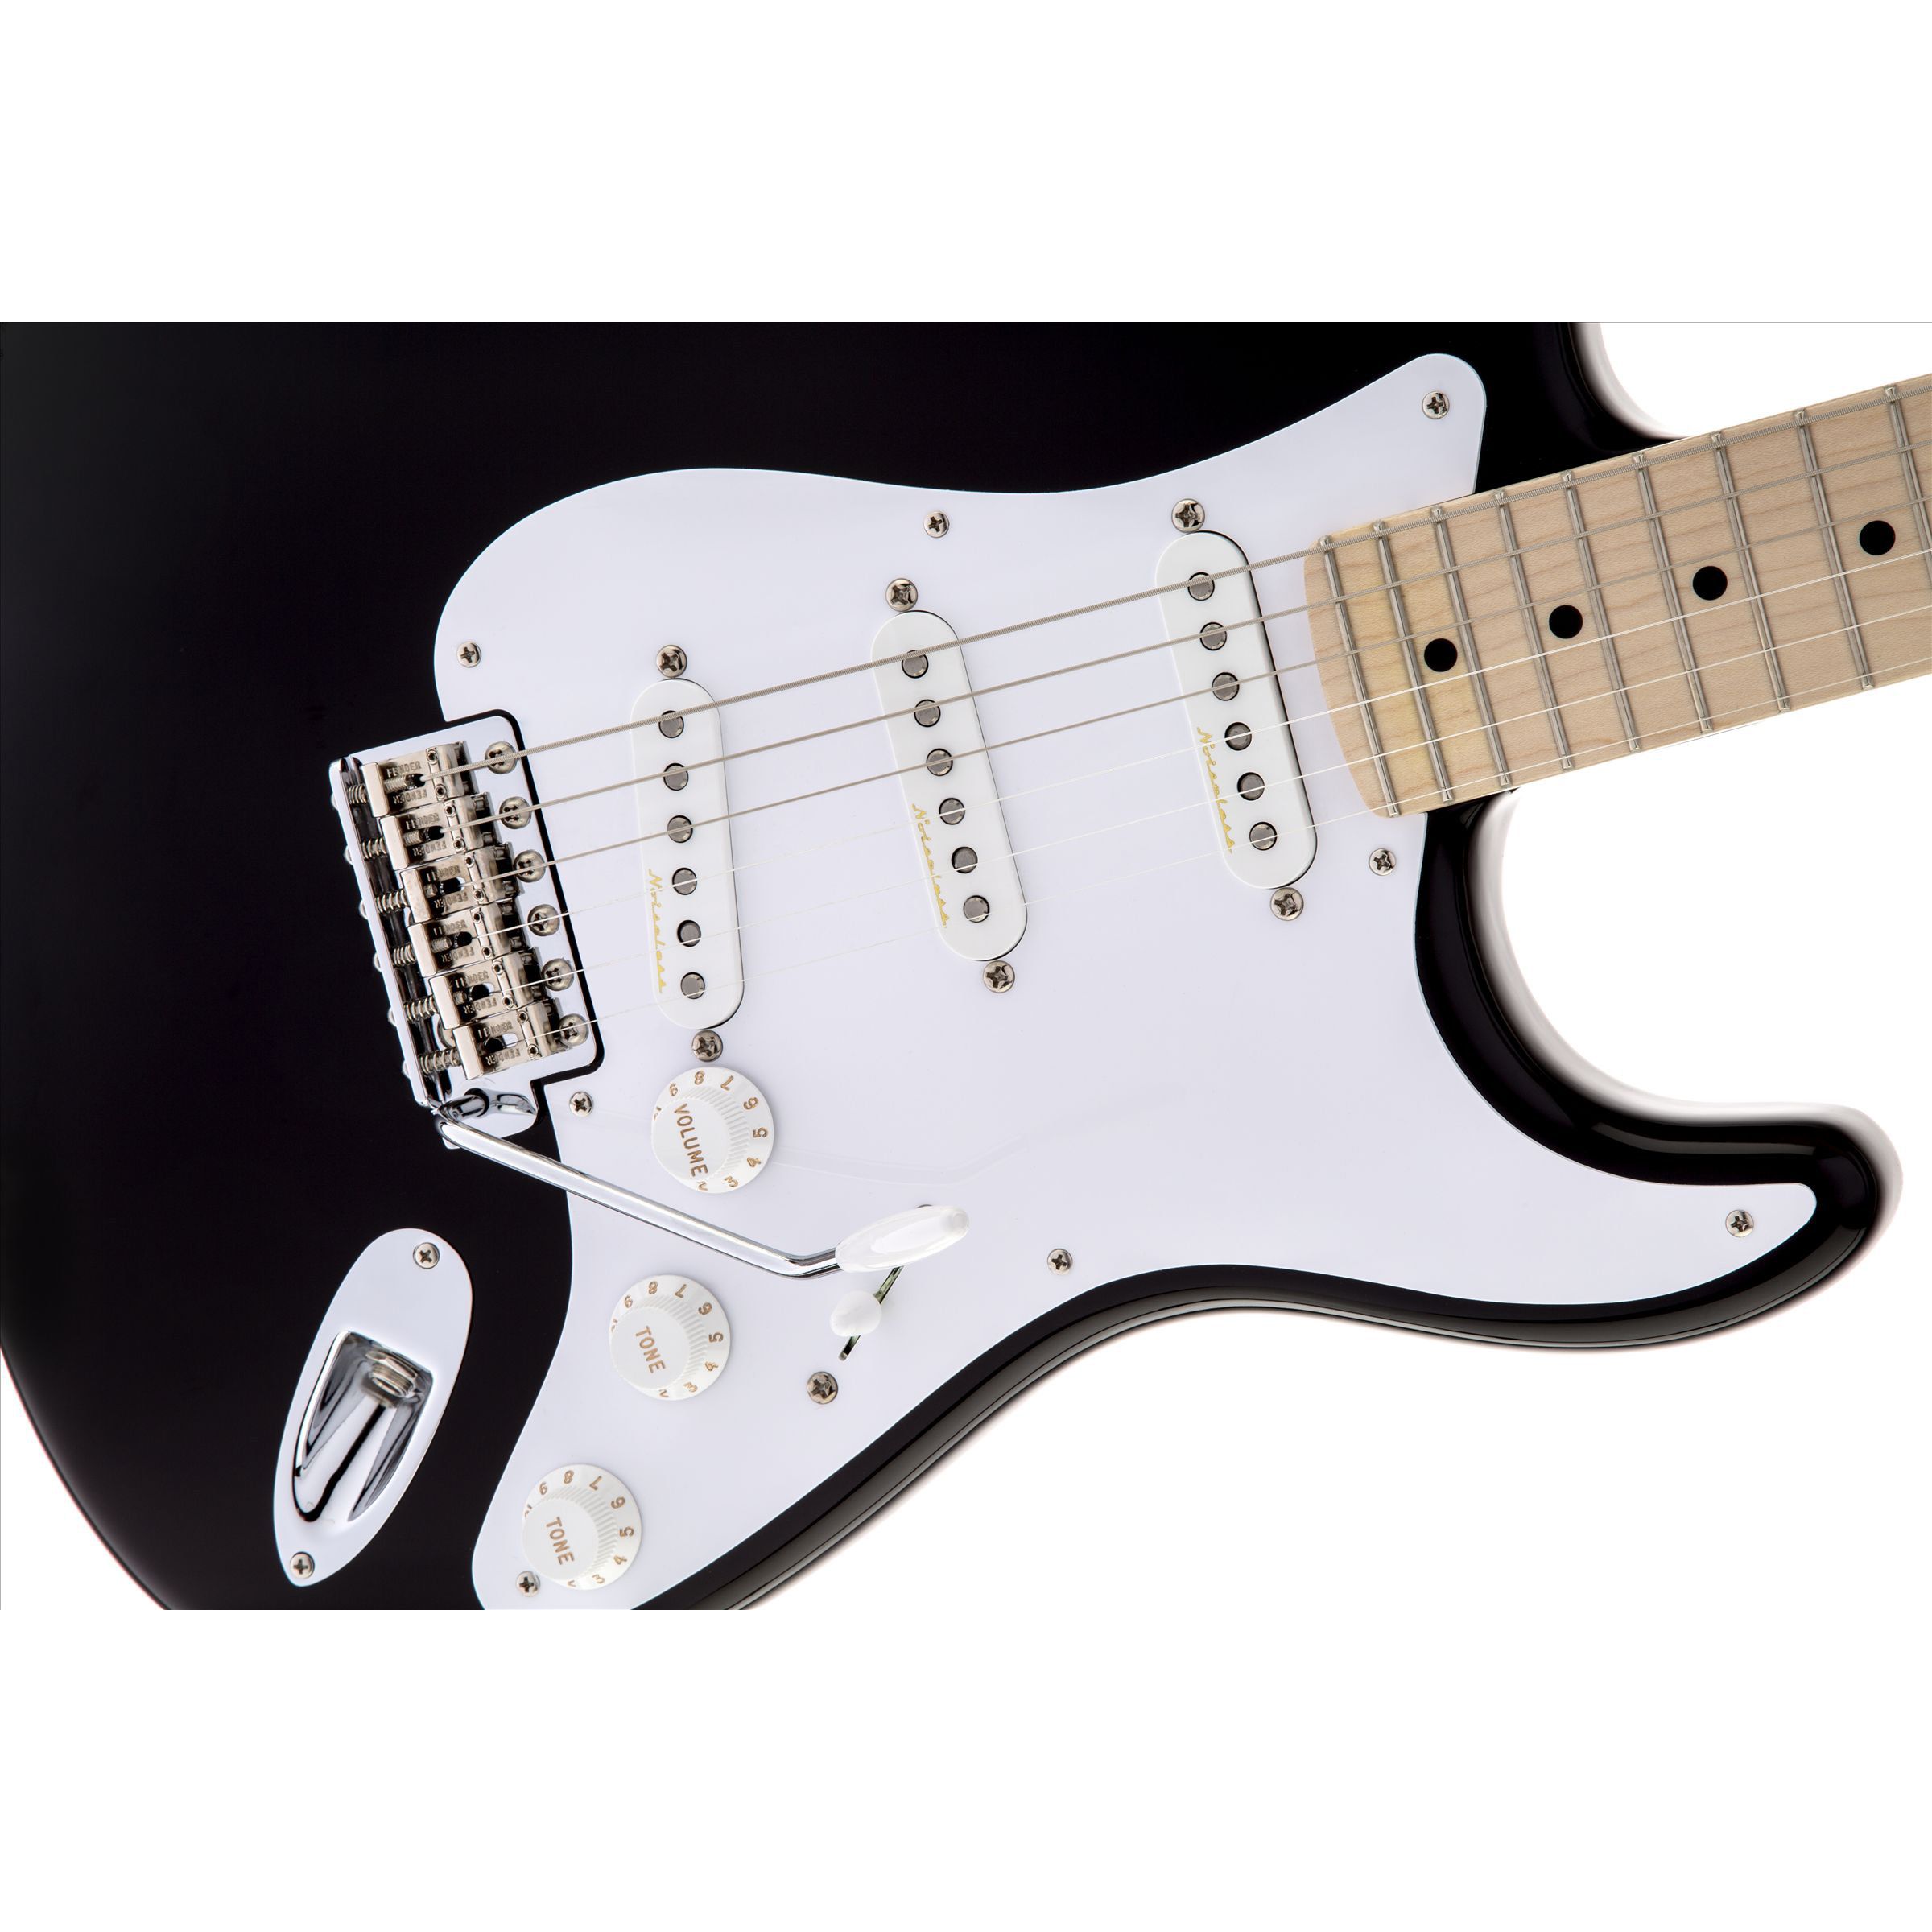 Stratocaster цена. Электрогитара Fender Stratocaster. Стратокастер гитара Fender. Fender Stratocaster черный. Электрогитара Fender Eric Clapton Signature Stratocaster.